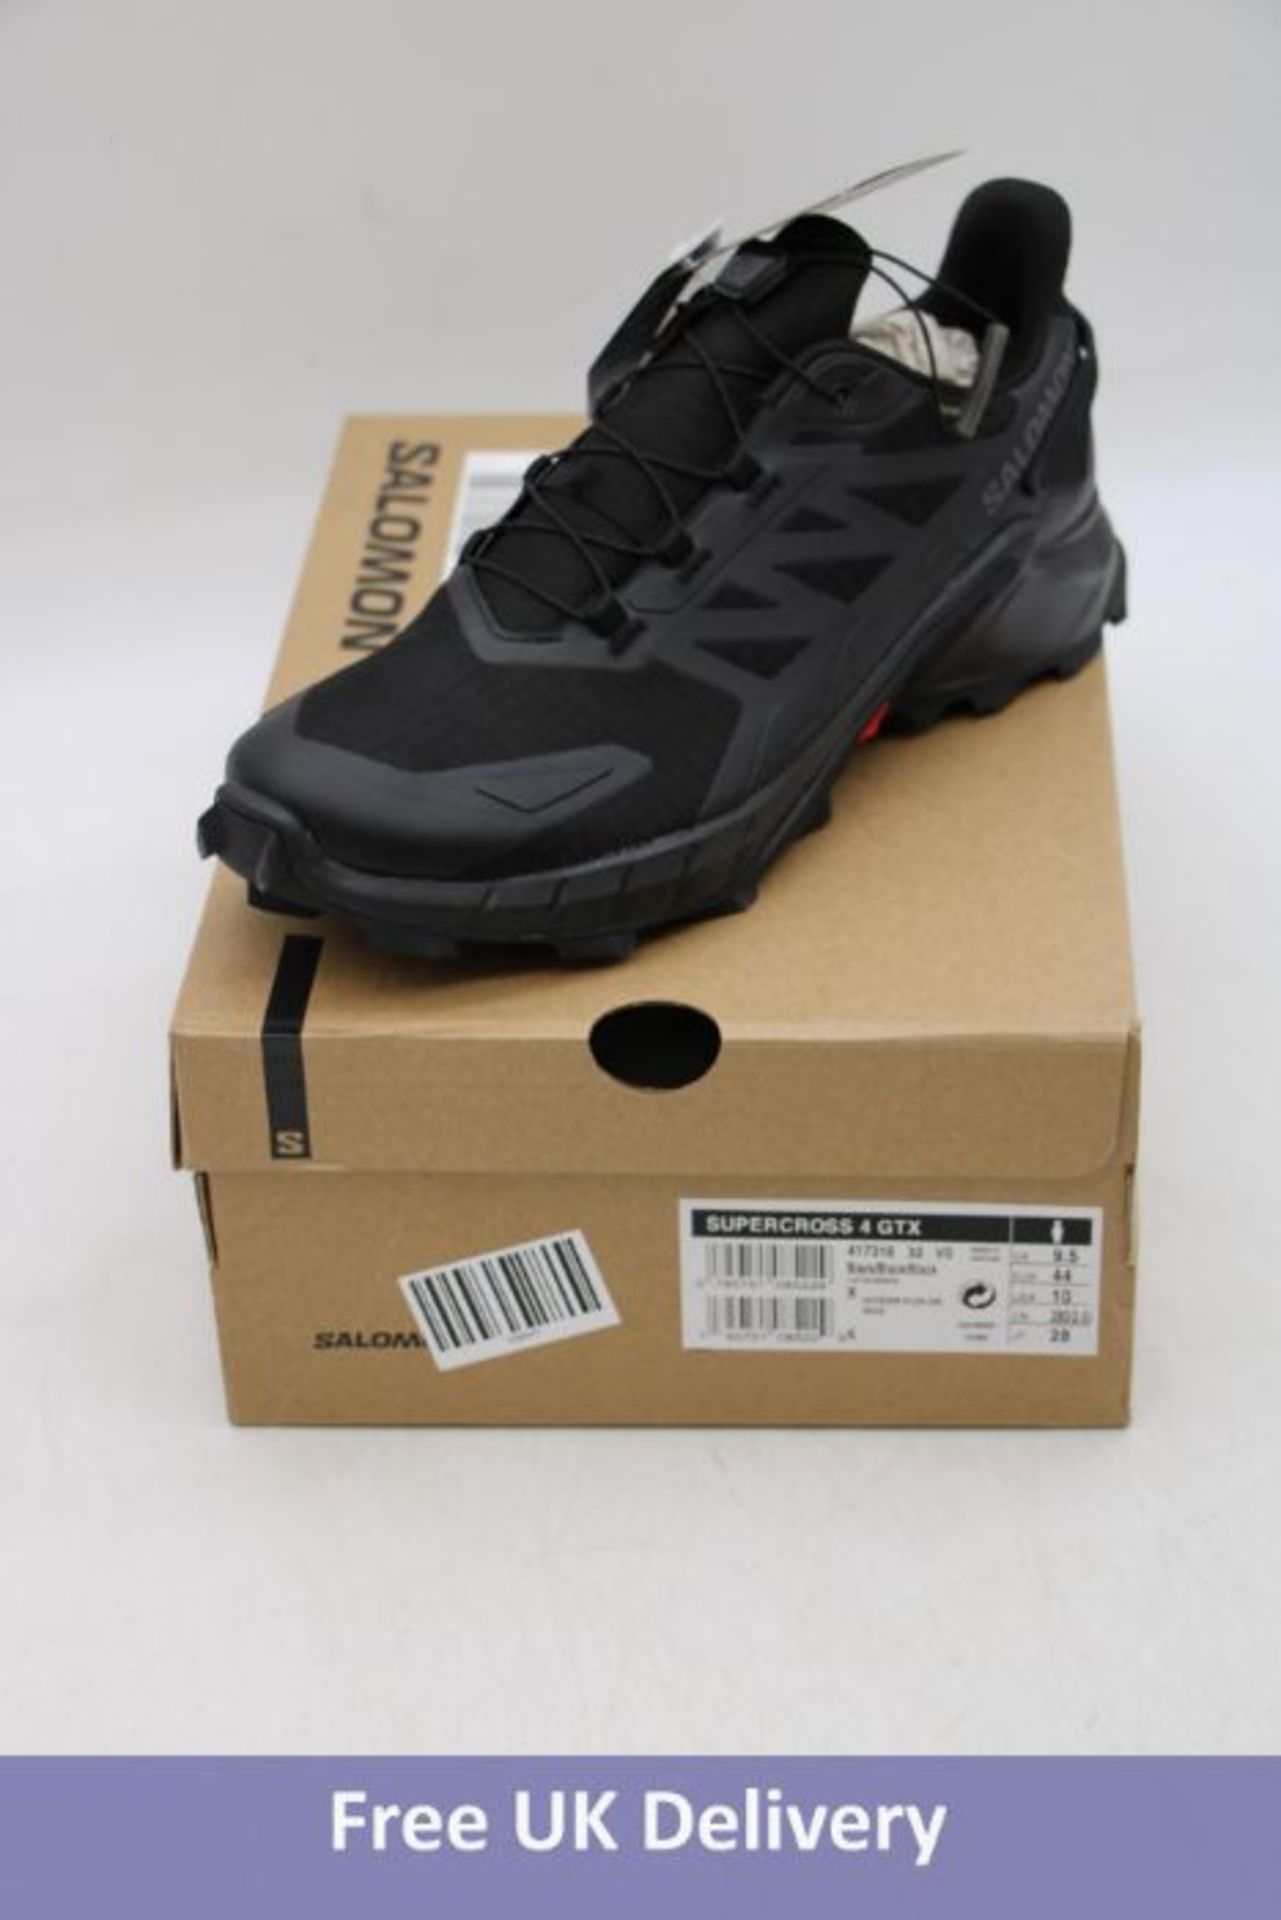 Salomon Men's Super Cross 4 GTX Running Shoes, Black, UK 9.5